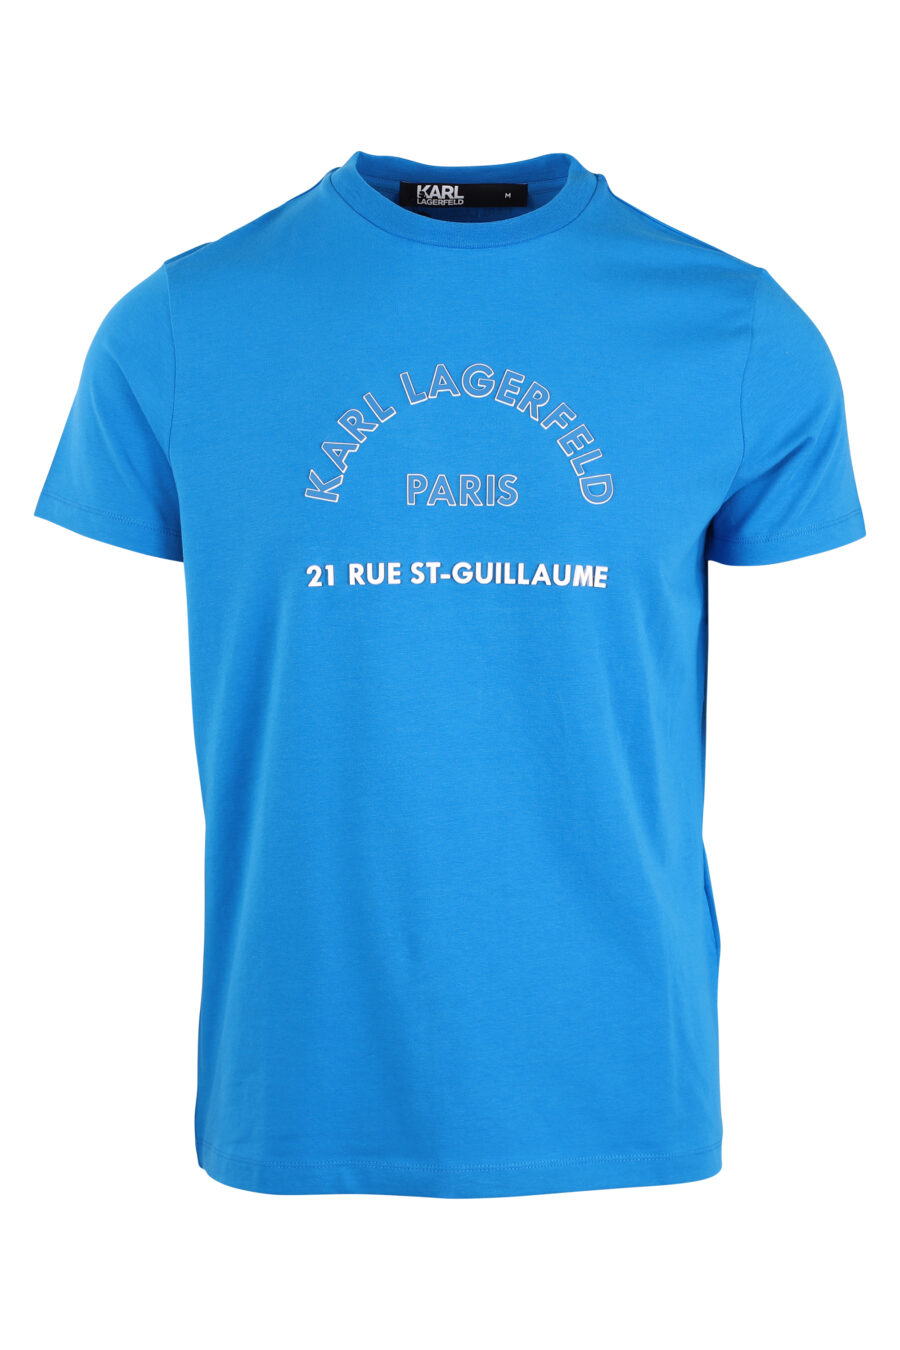 Camiseta azul con logo "rue st-guillaume" - IMG 4345